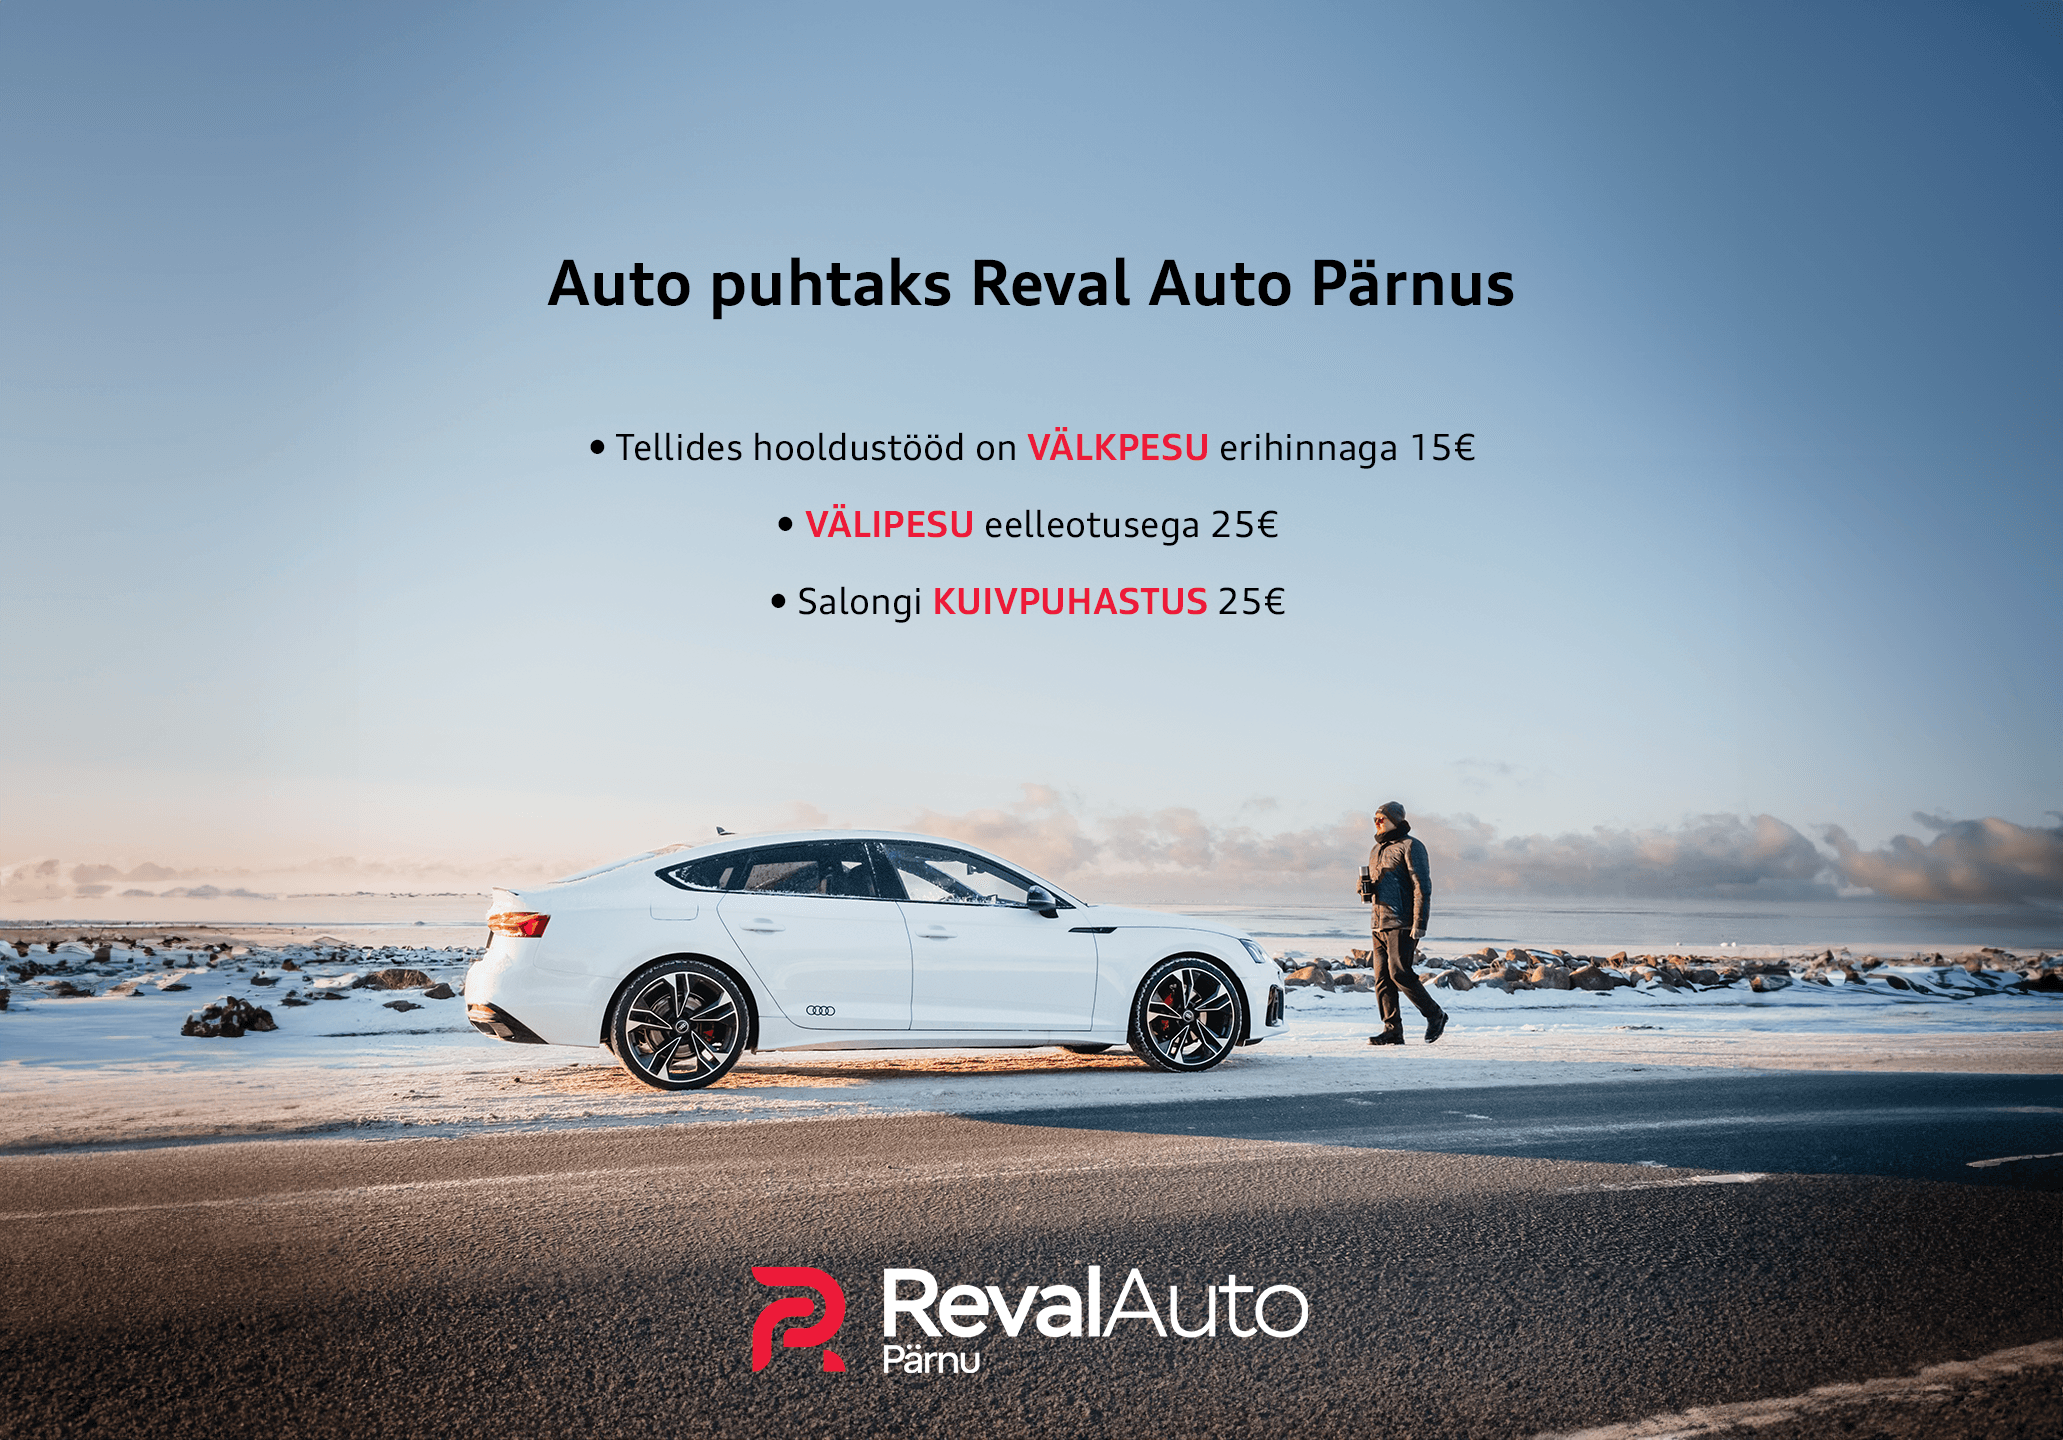 Shiny Car at Reval Auto Pärnu